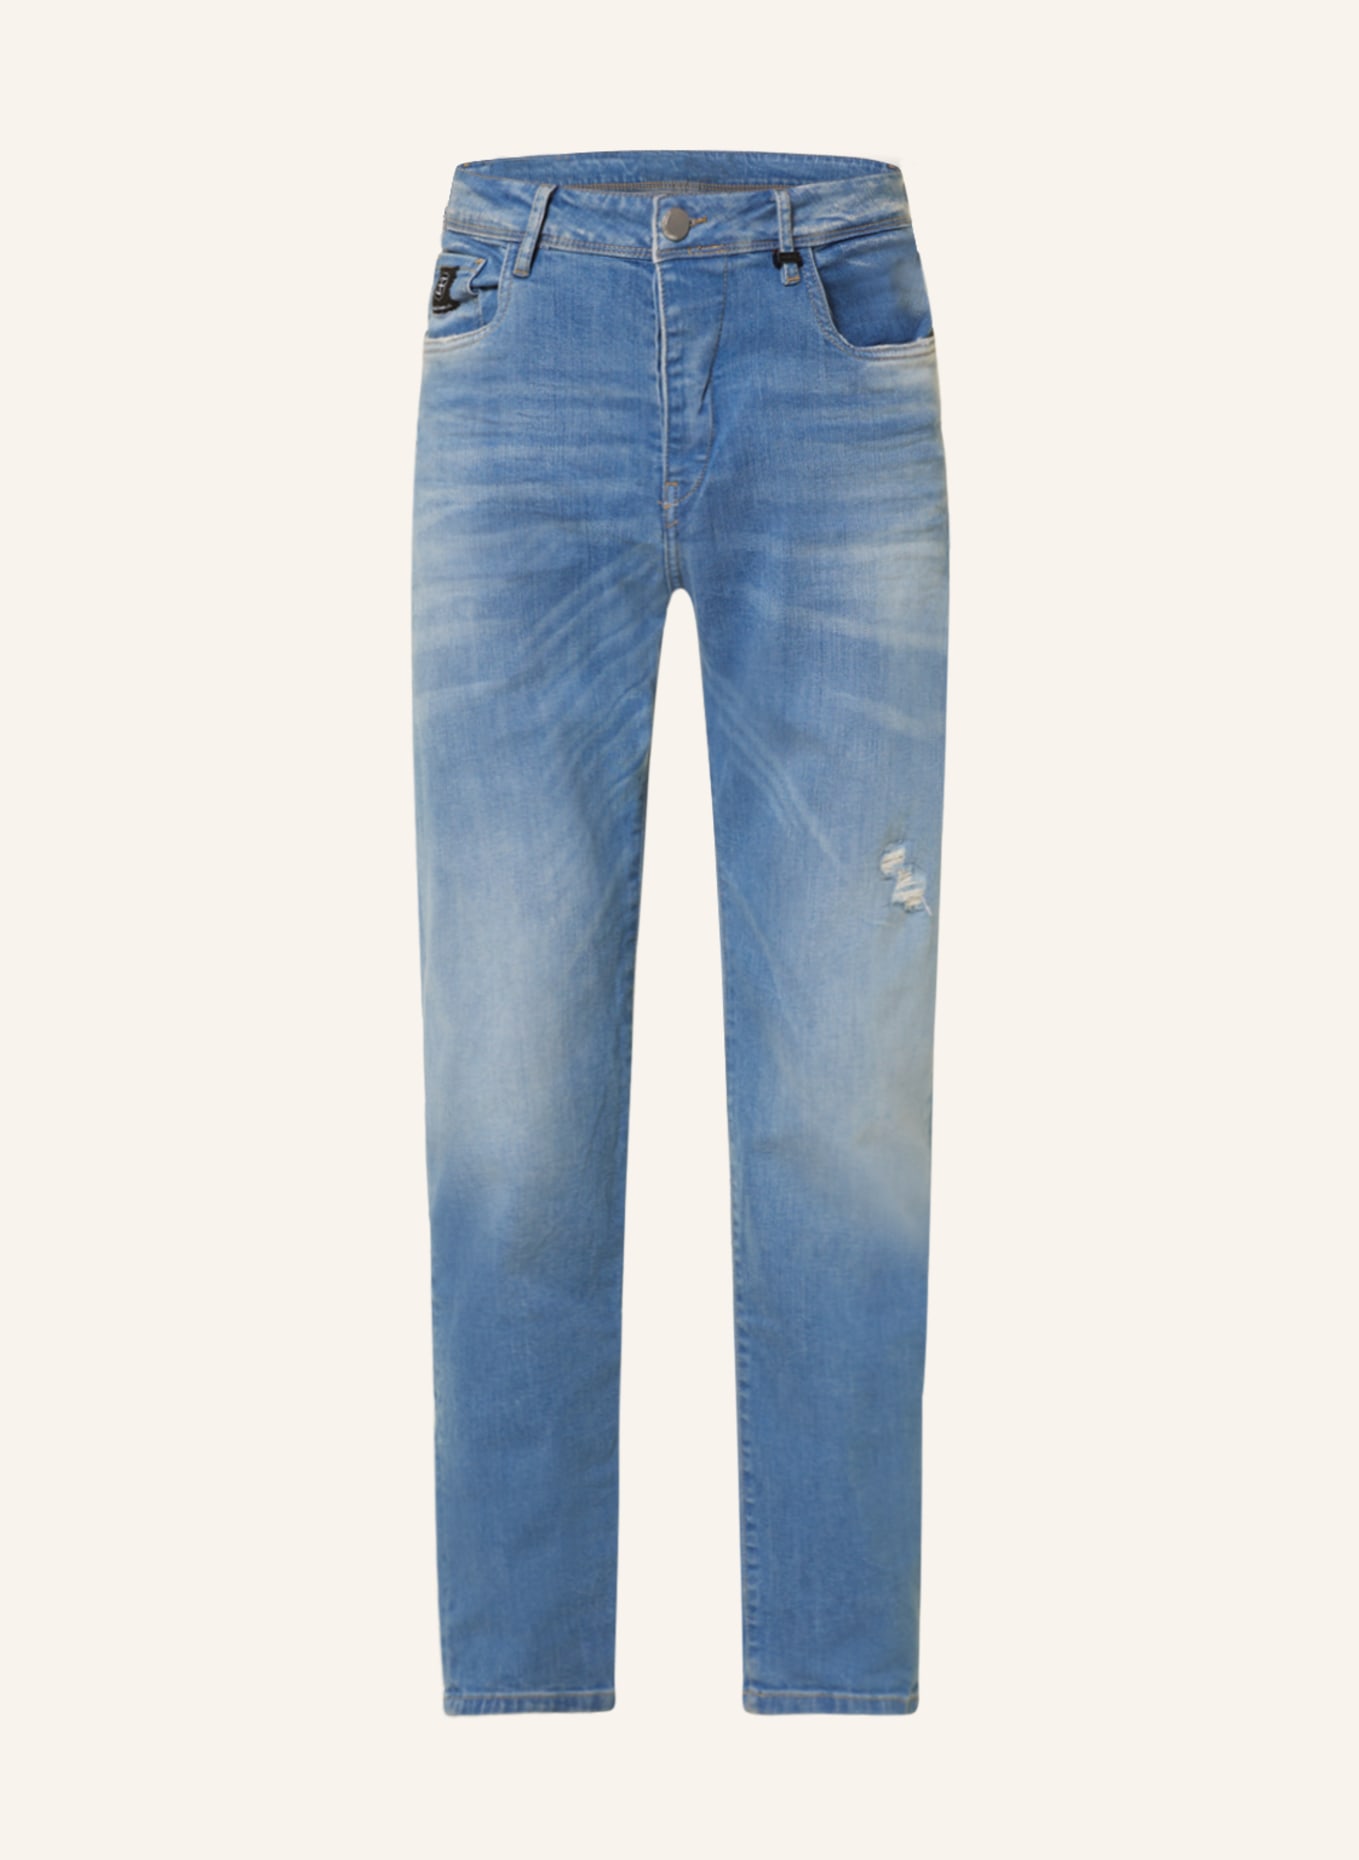 ELIAS RUMELIS Destroyed Jeans ERZAVEN Comfort Fit, Farbe: 546 Starnight Blue (Bild 1)